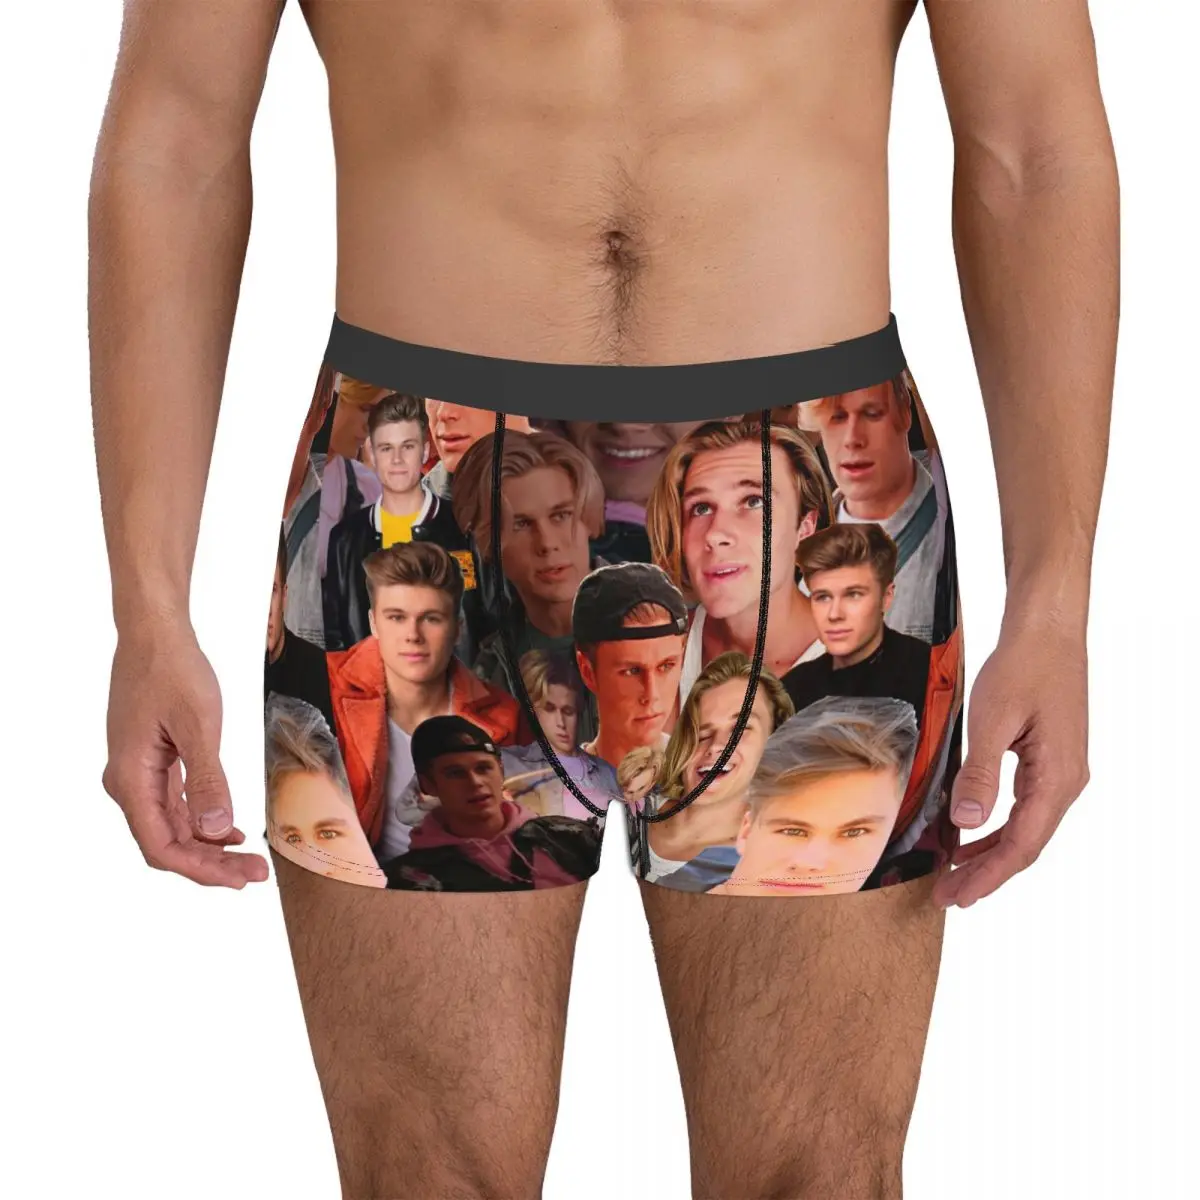 Owen Joyner Photo Collage Men's Boxer Briefs Shorts Men Underpants Cartoon Anime Funny Men's Panties Soft Underwear For Men